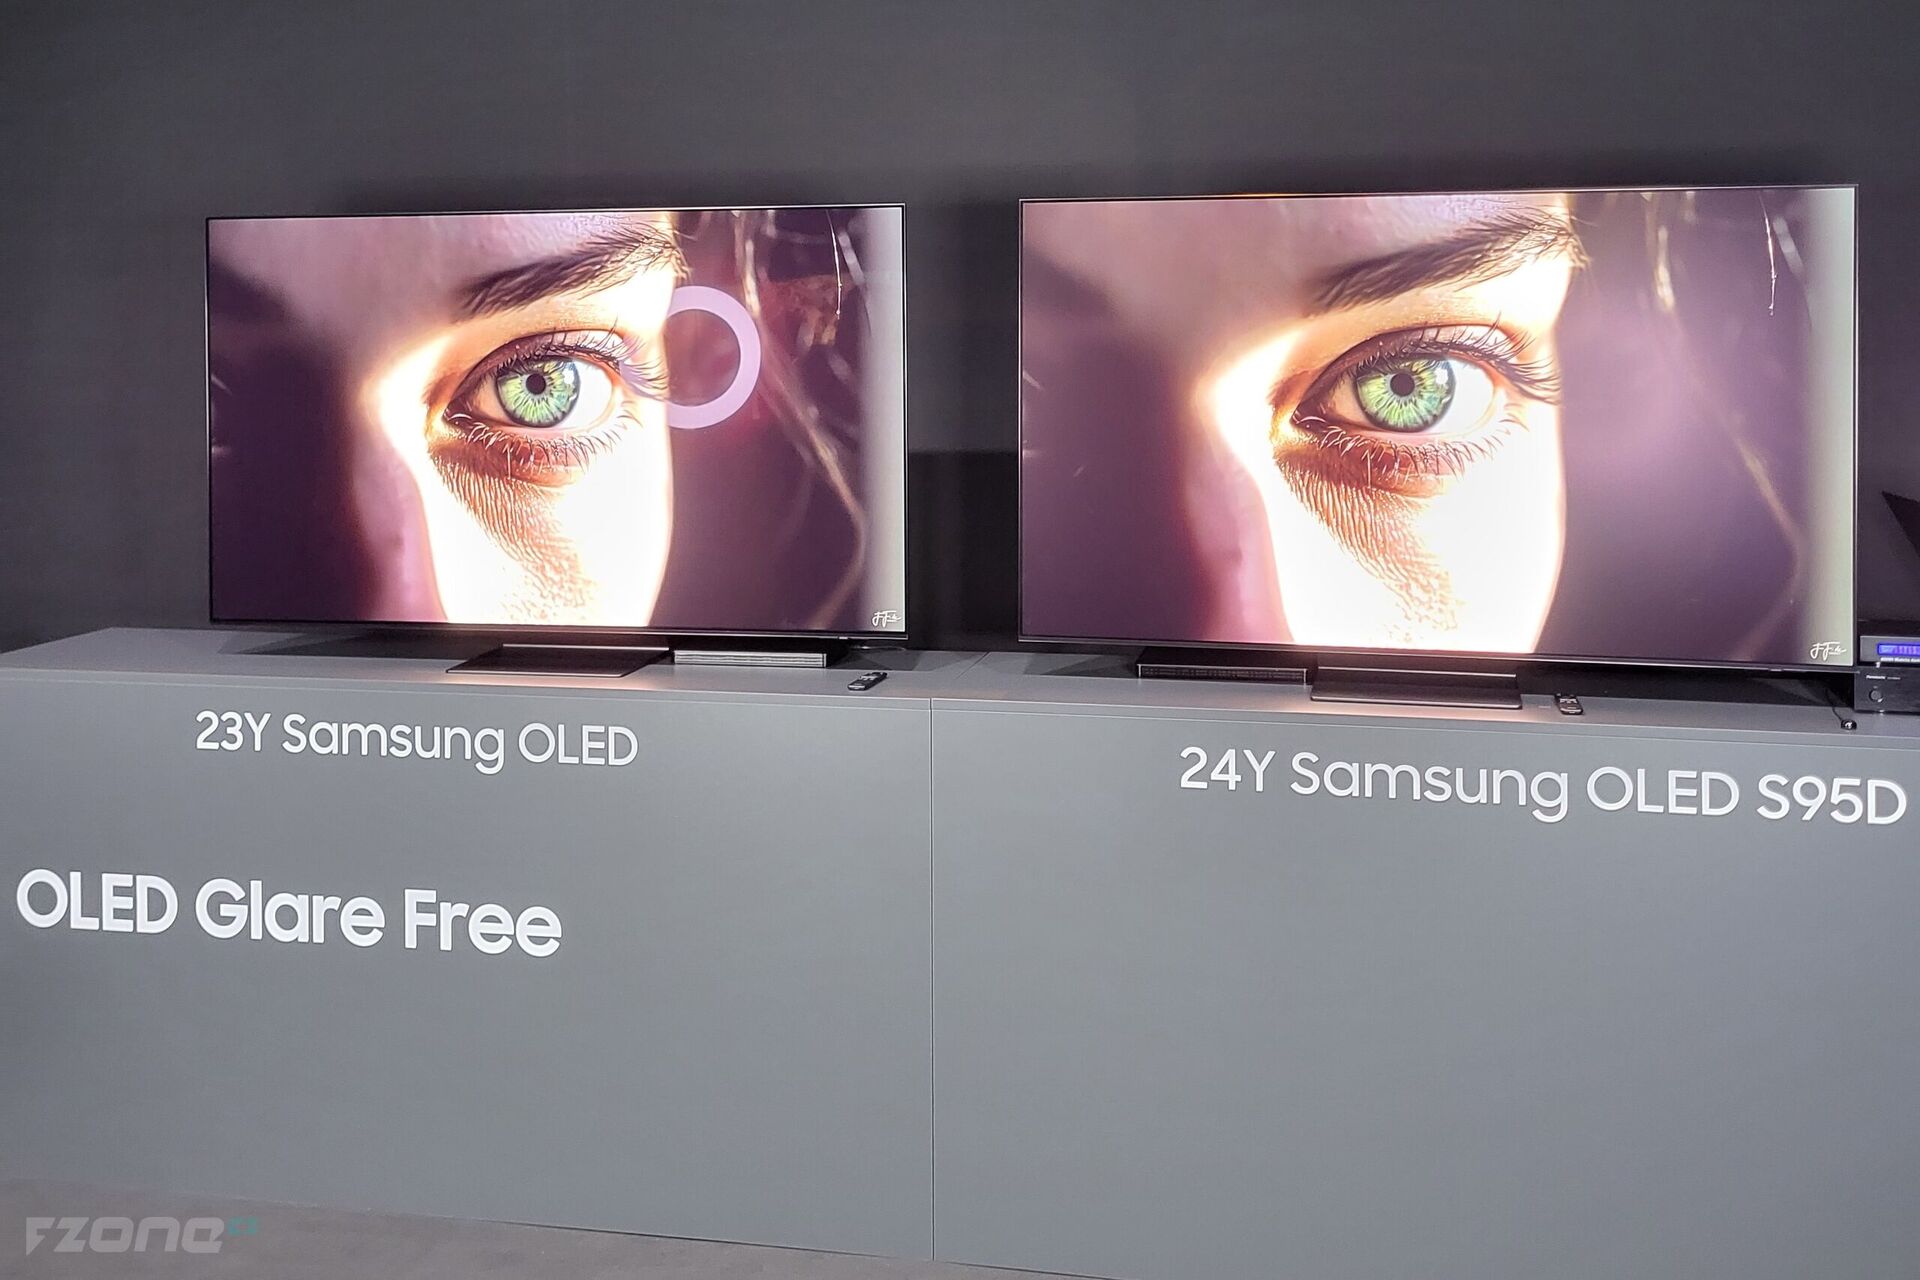 Samsung OLED Glare Free